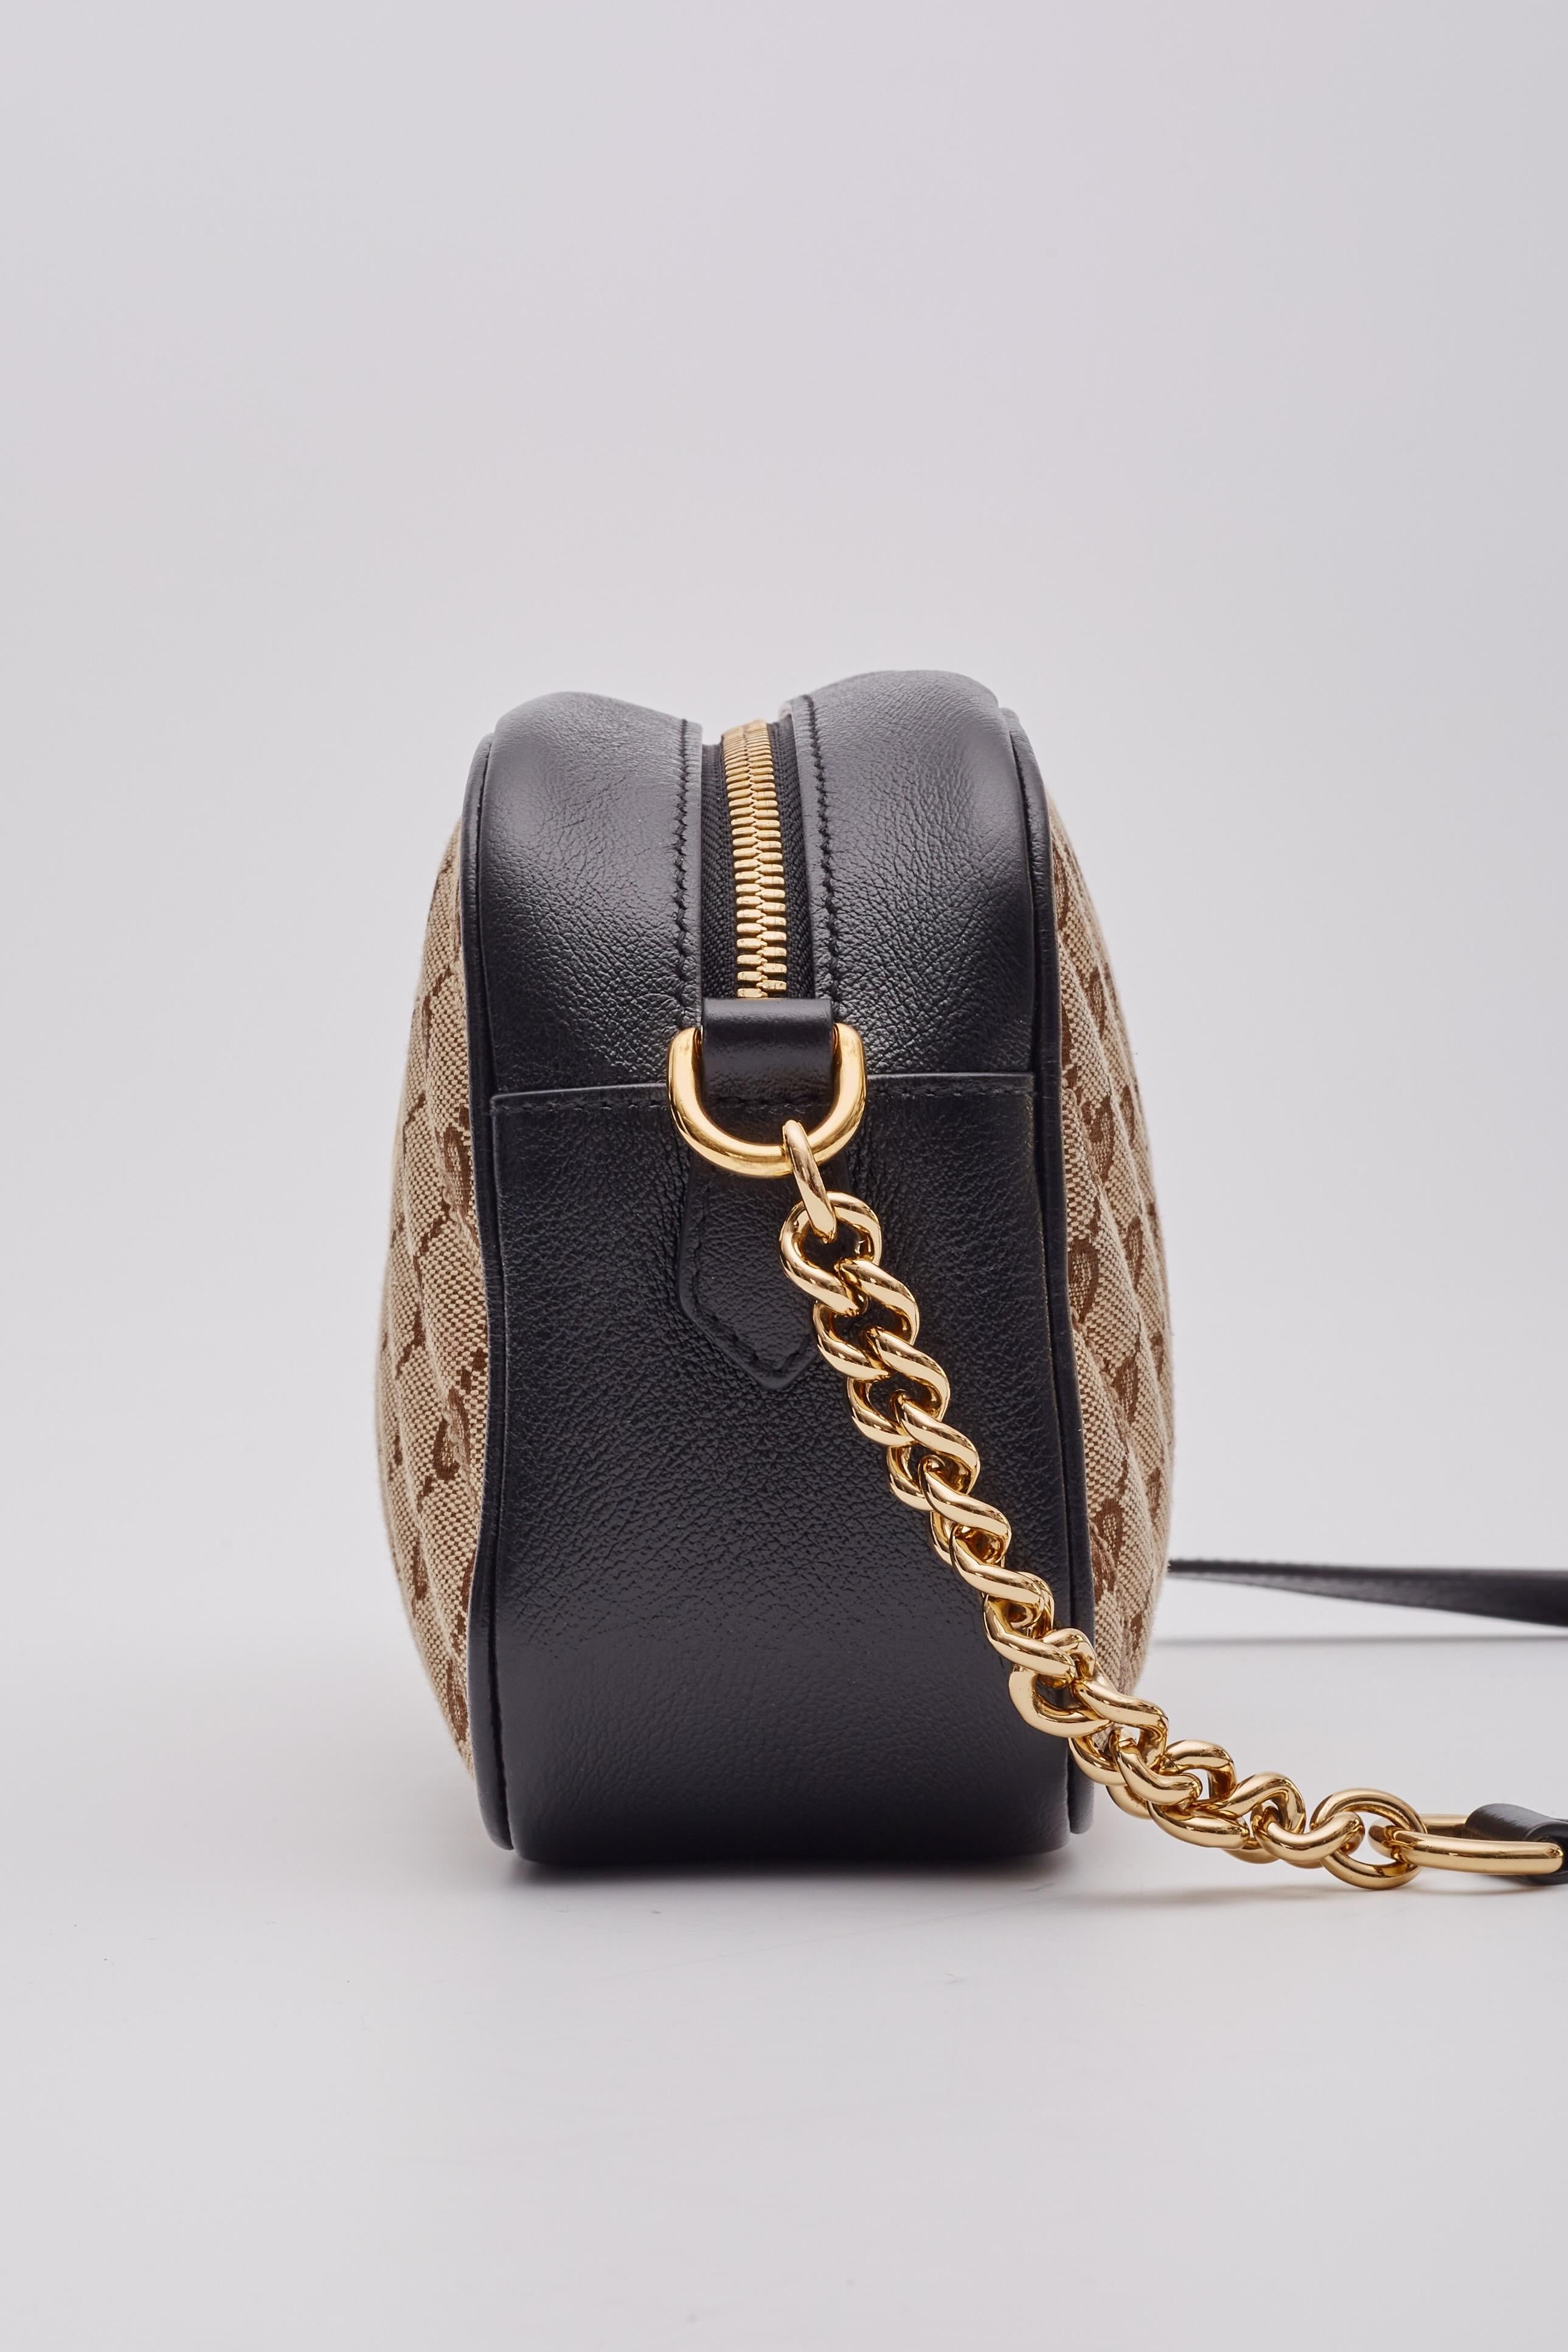 Gucci Monogram Small GG Marmont Shoulder Bag Beige Black For Sale 2